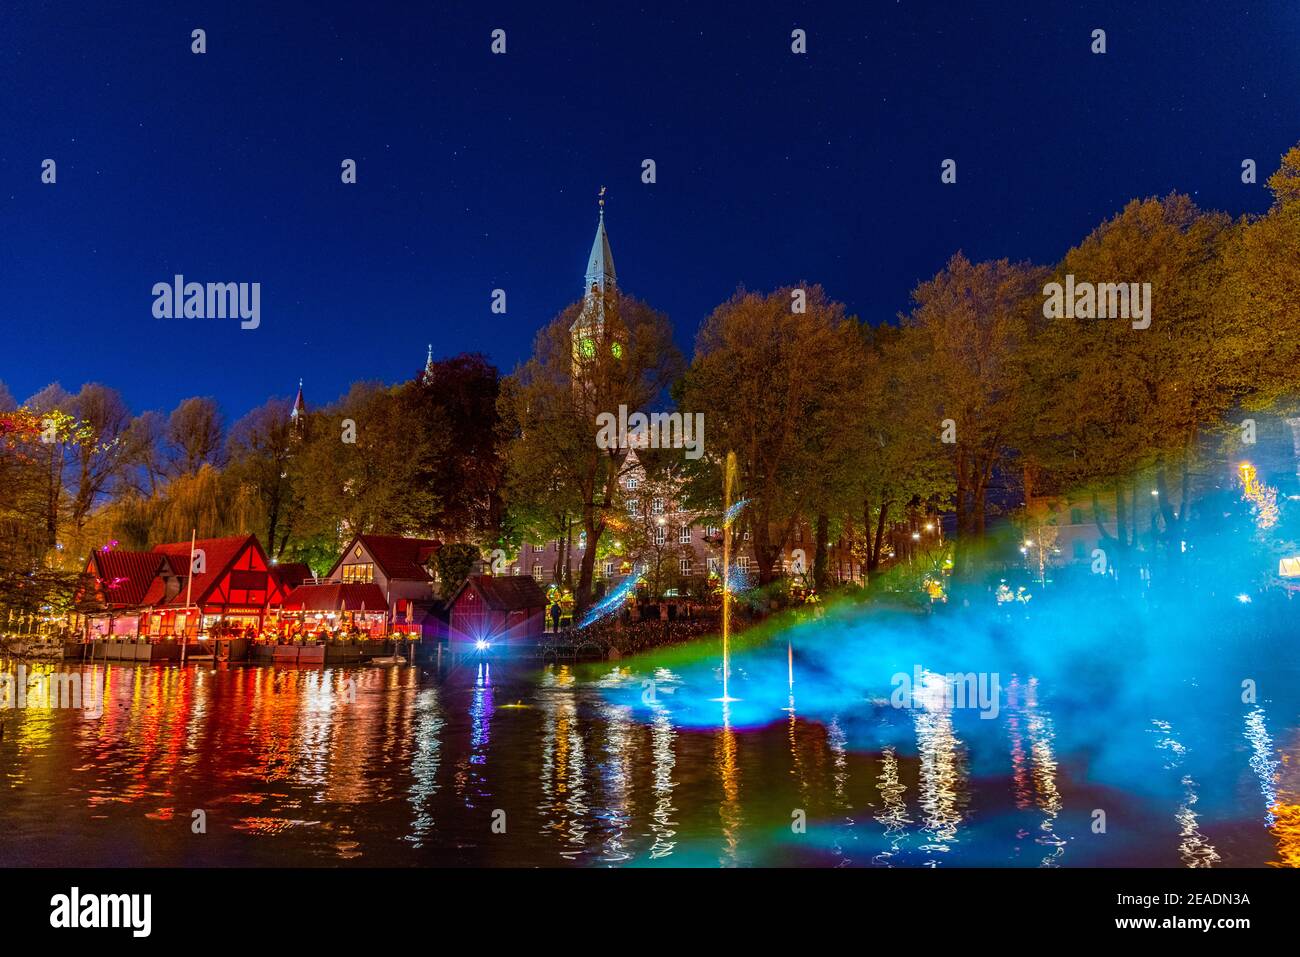 Light and sound show on surface of a pond at Tivoli gardens amusement park  in Copenhagen, Denmark Stock Photo - Alamy